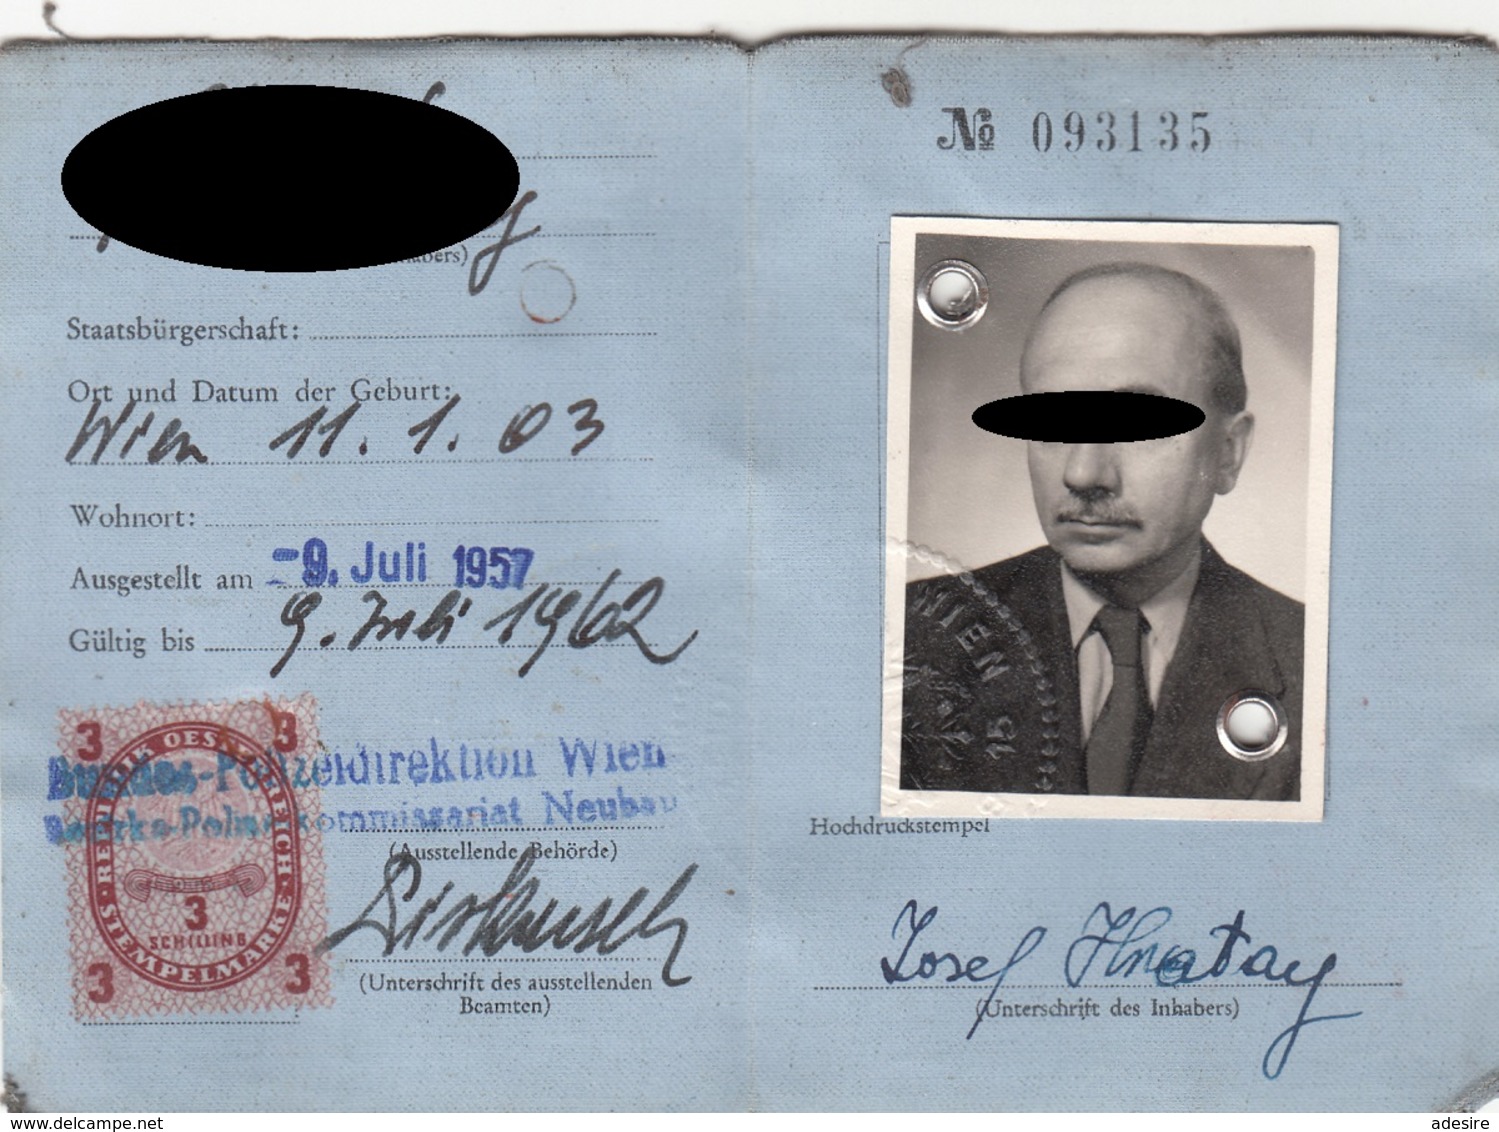 PERSONALAUSWEIS Leinen 1957 - 3 S Stempelmarke - Historische Dokumente